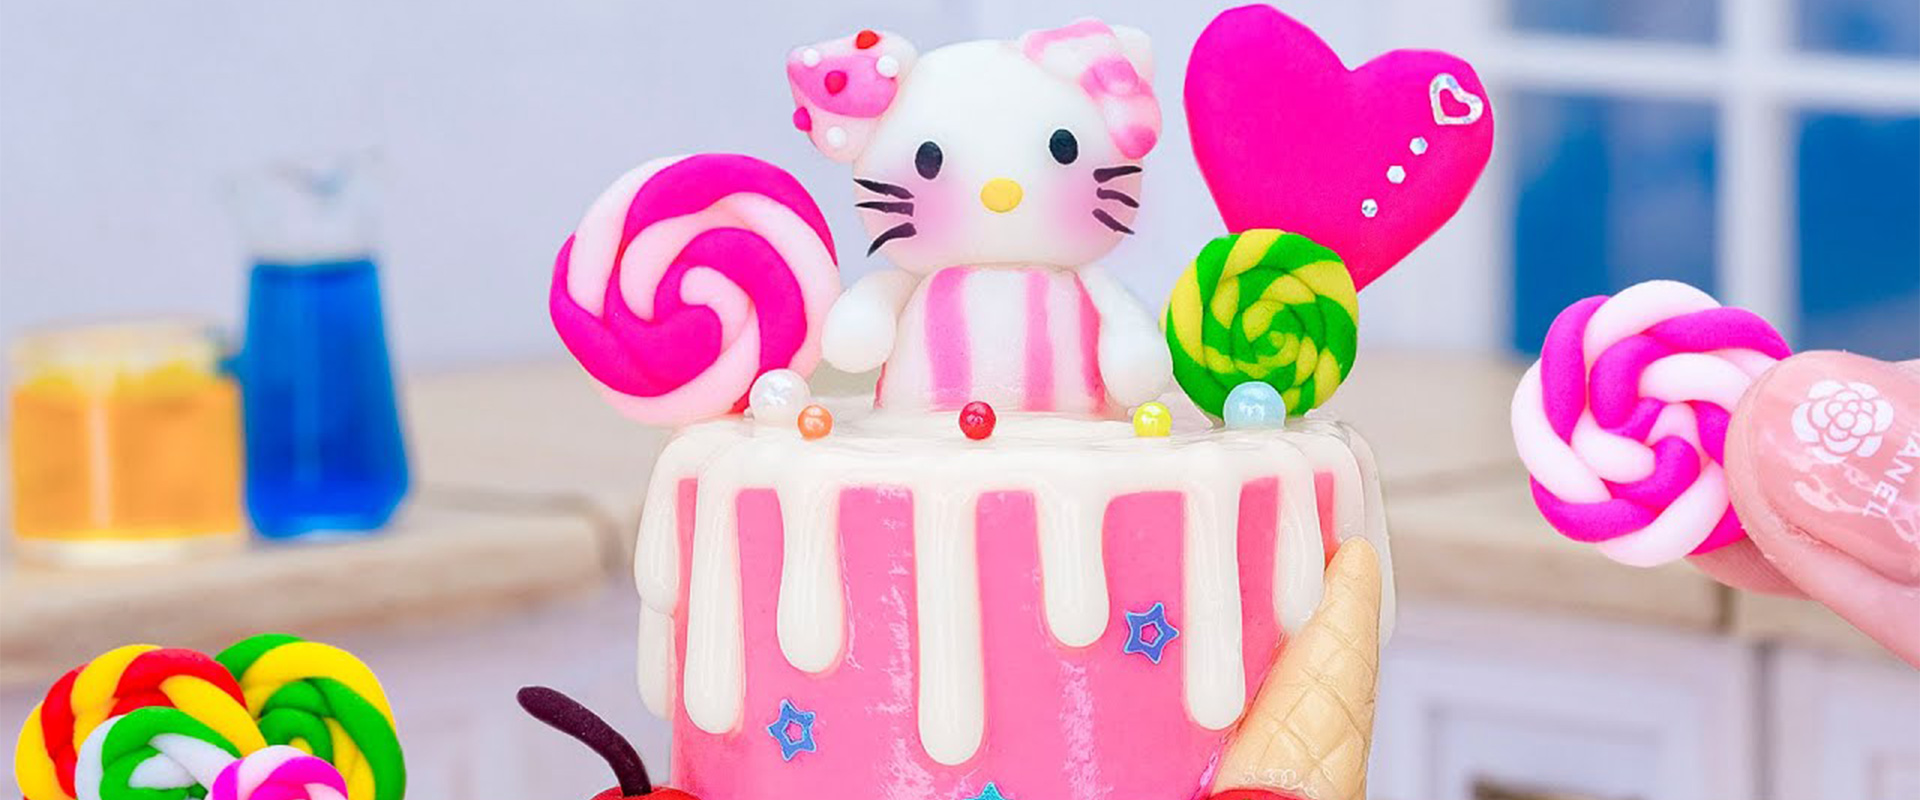 Satisfying Miniature Hello Kitty Cake Decorating - Best Strawberry Cake Recipe By Mini Tasty